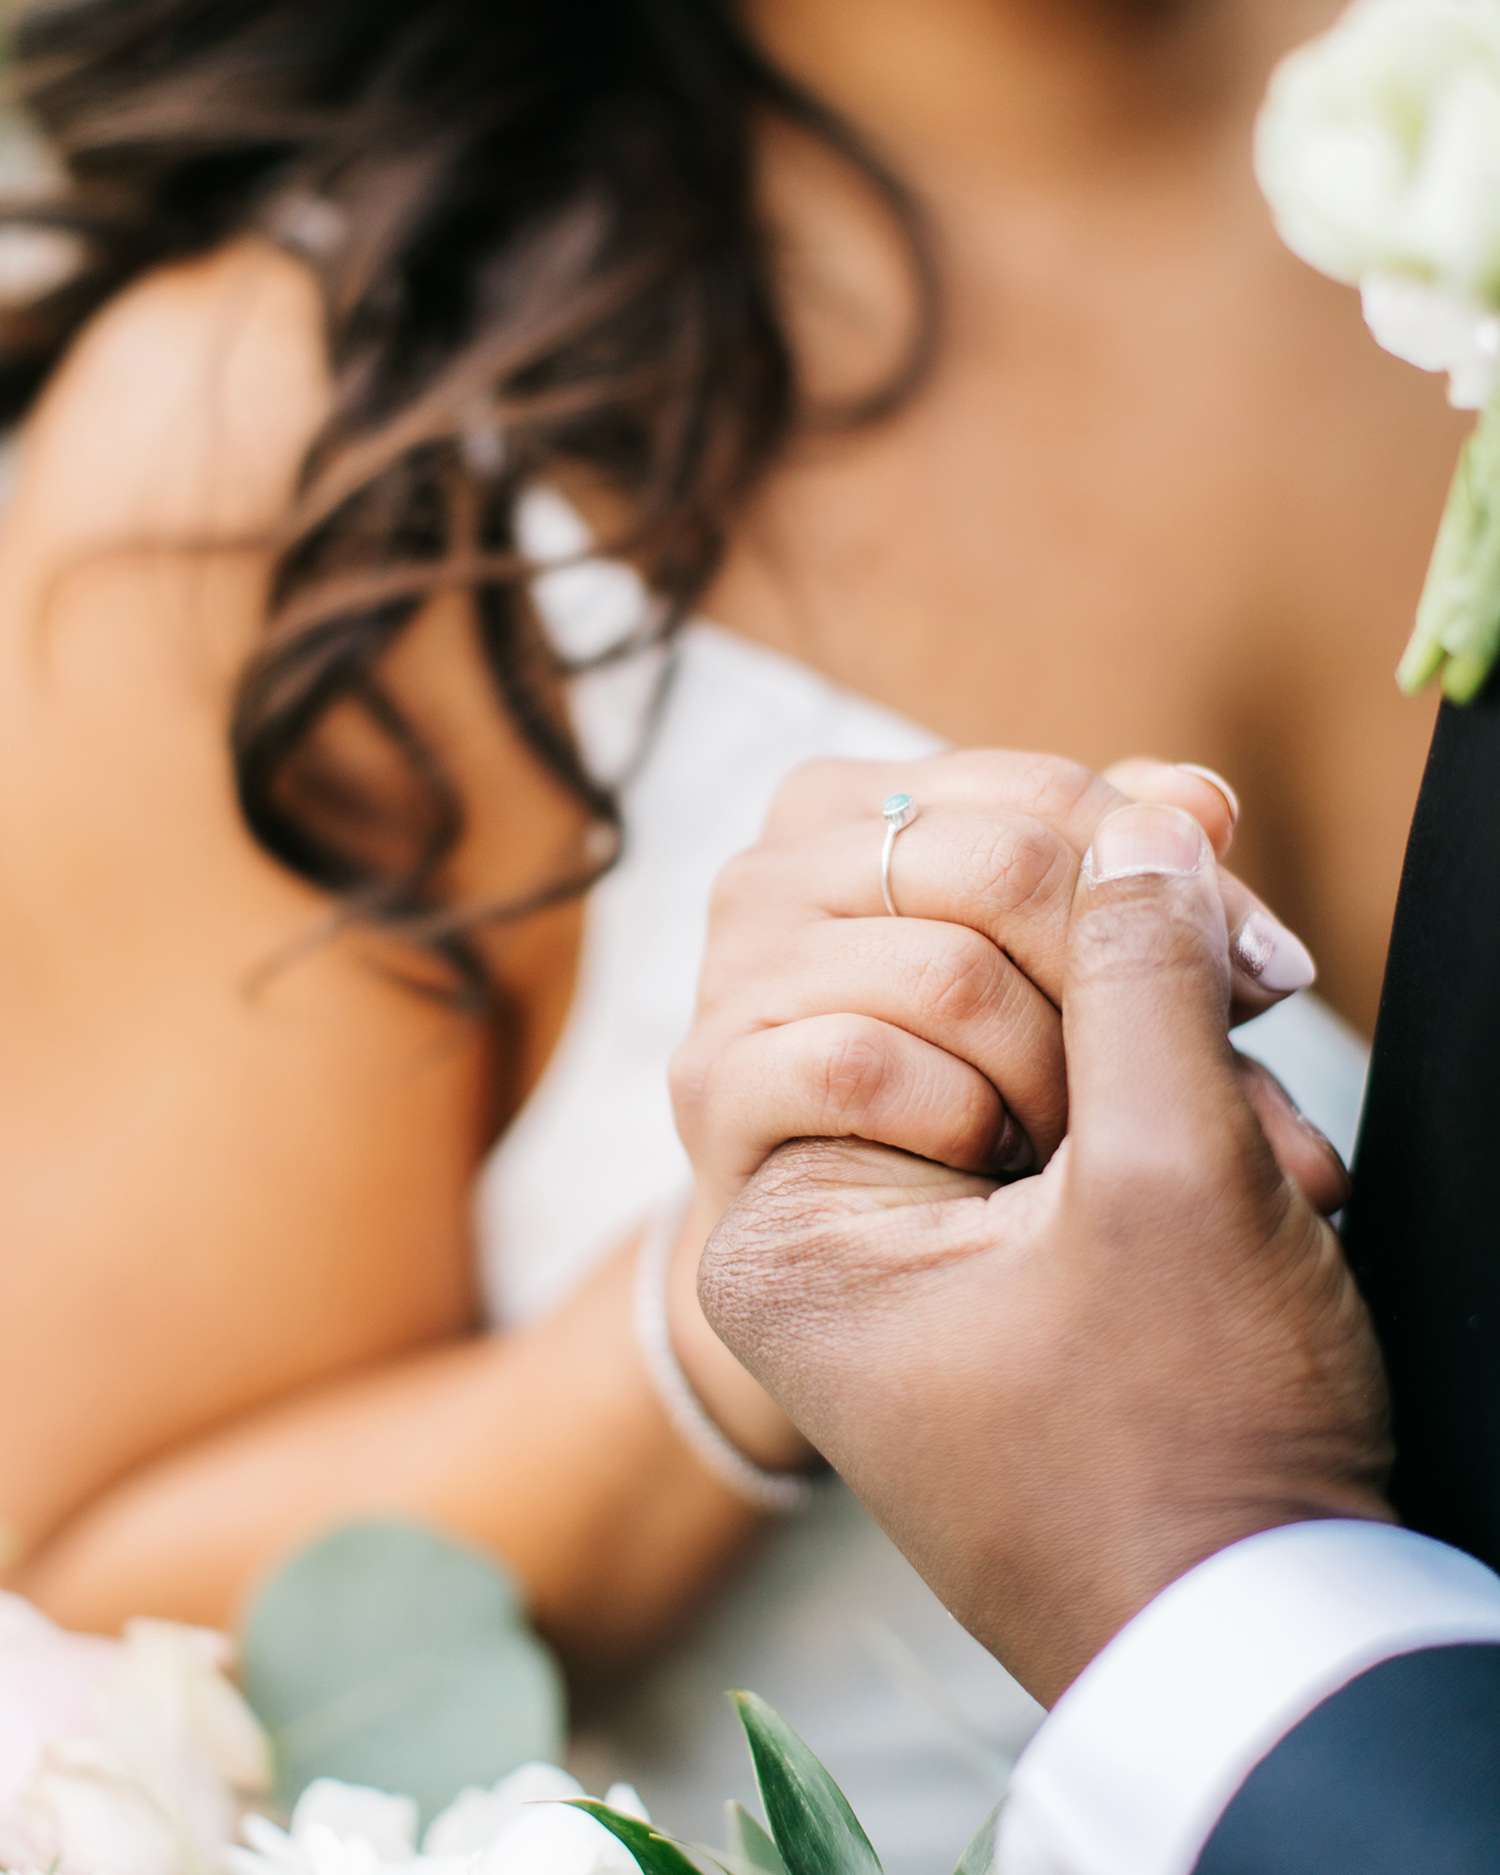 jessica ali wedding ring holding hands